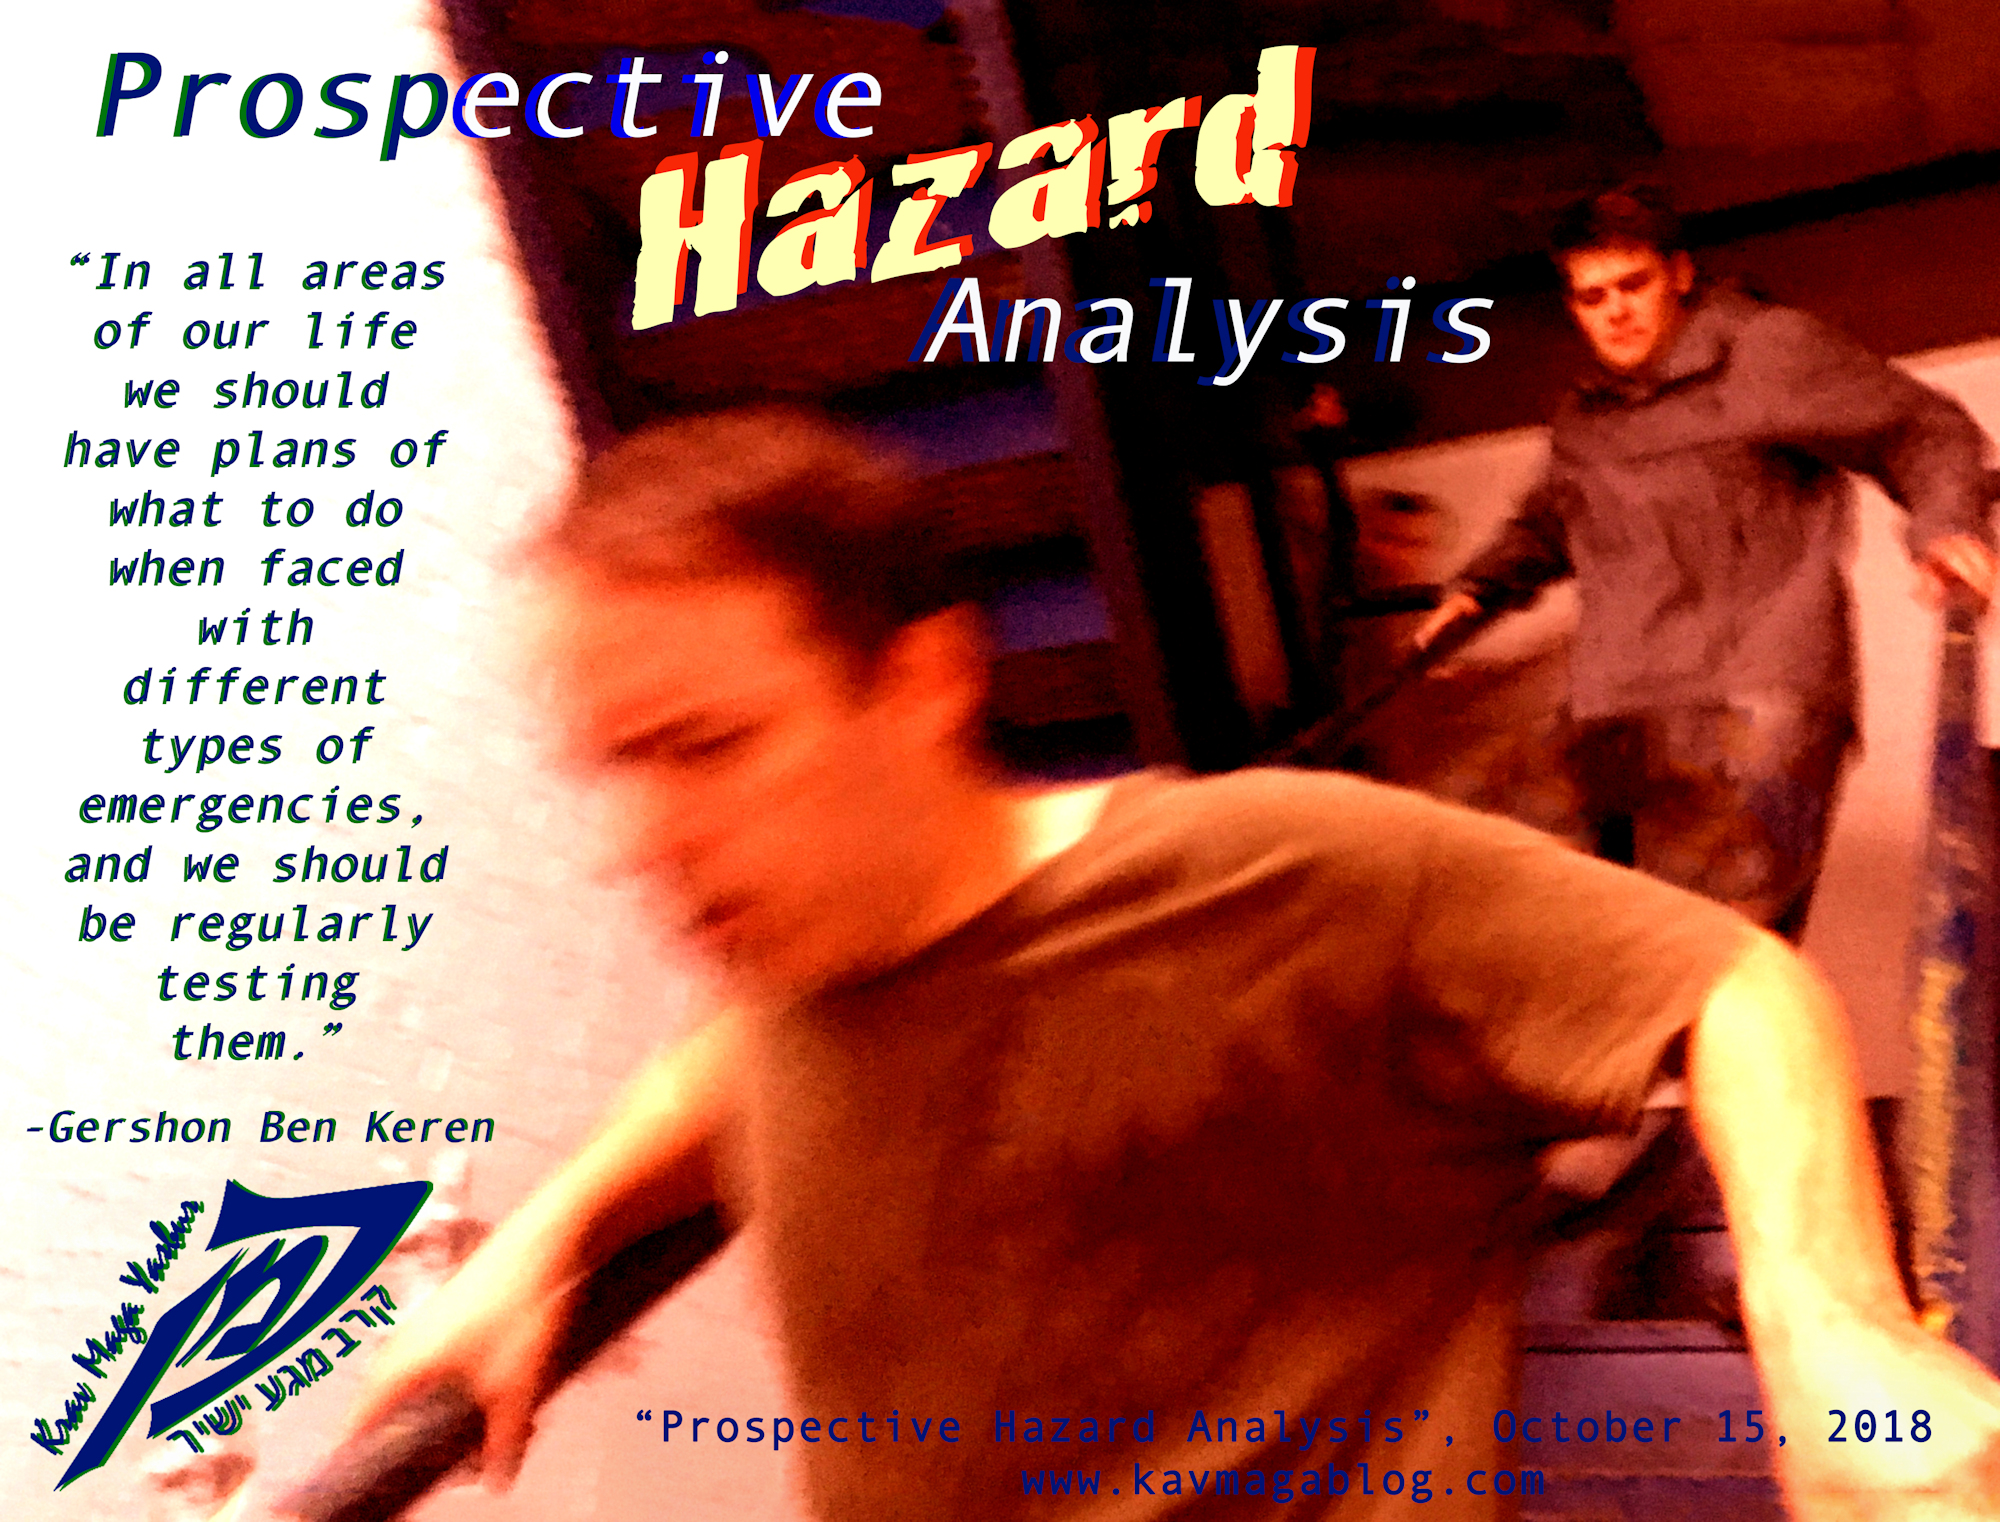 Blog About Prospective Hazard Analysis